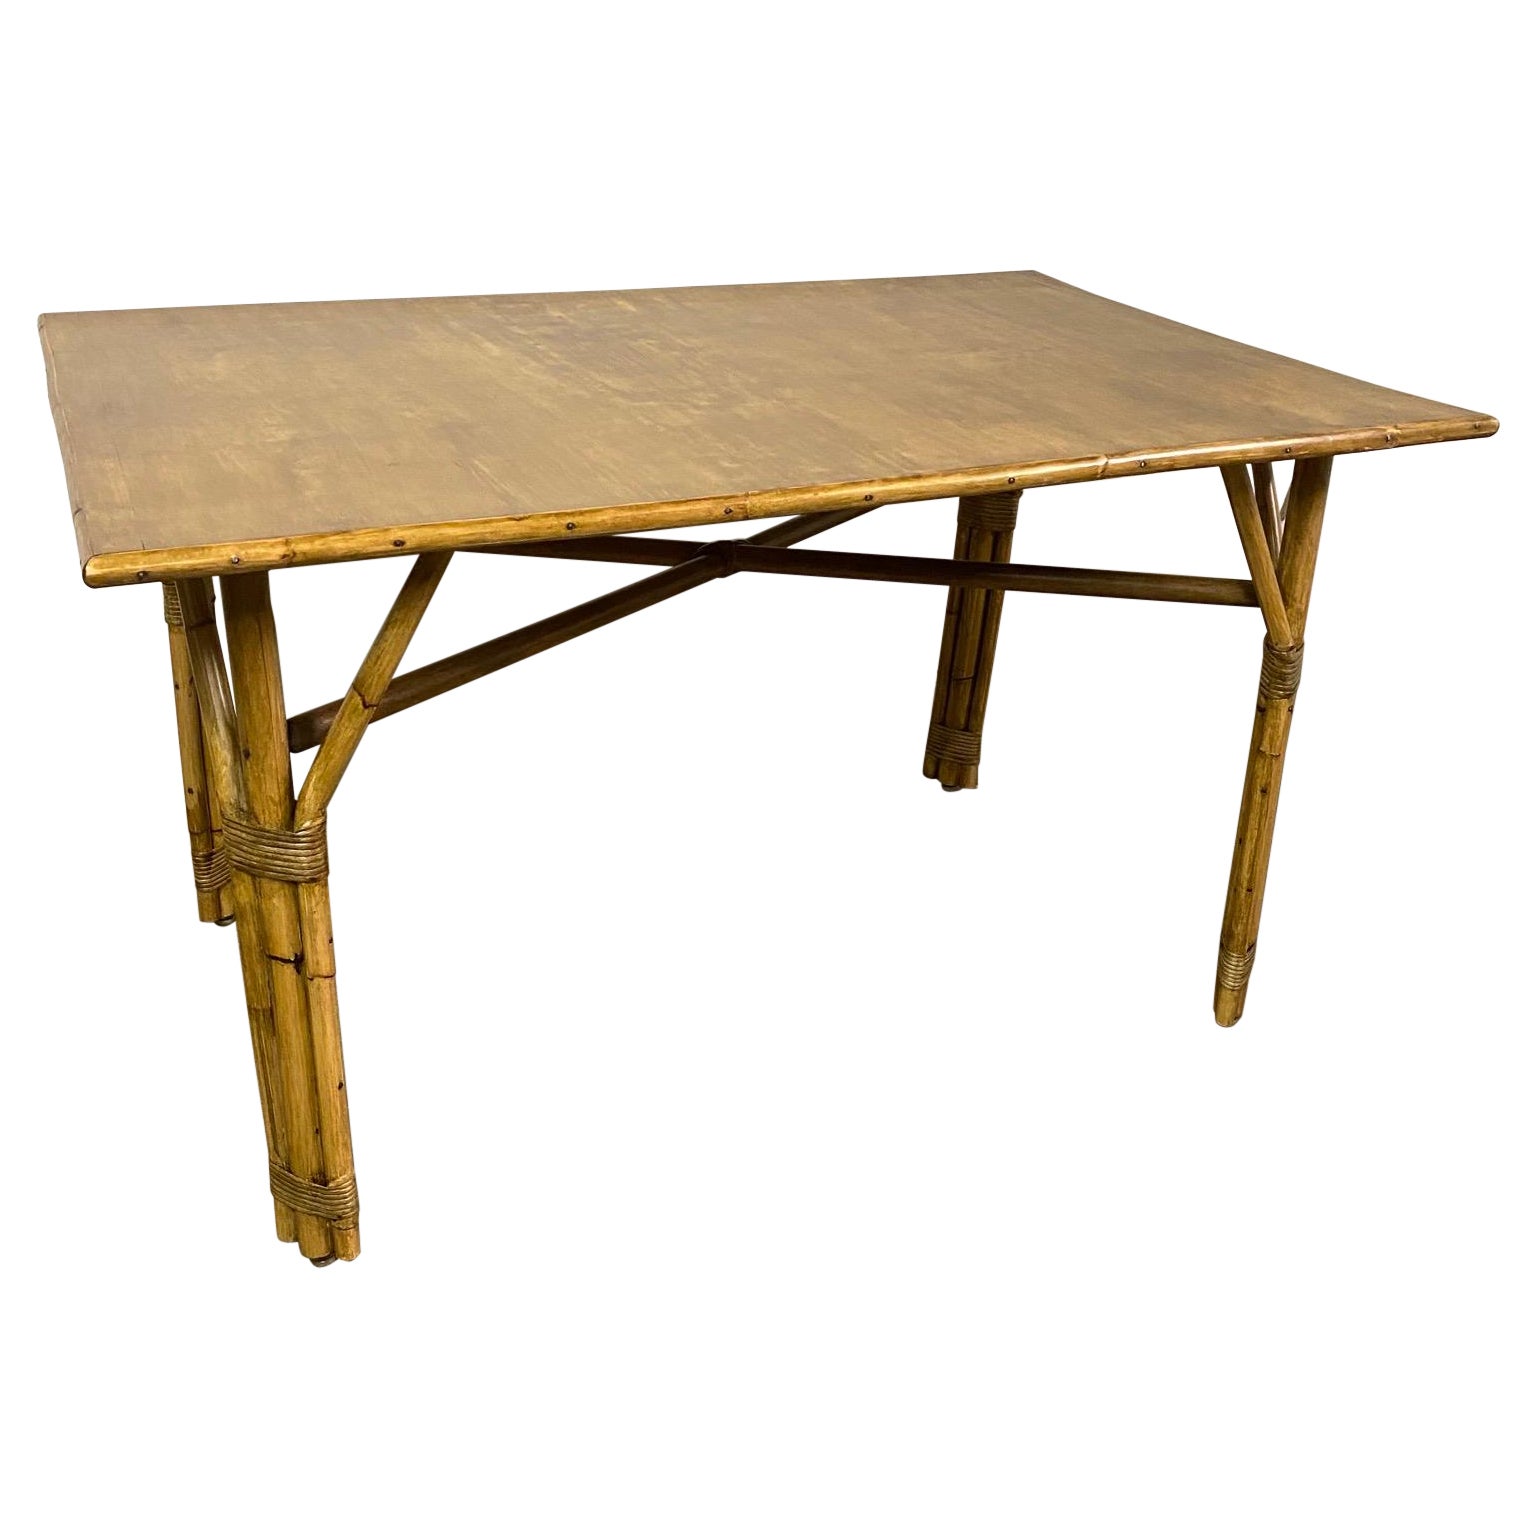 Vintage Mid-Century Modern Rattan Desk or Table